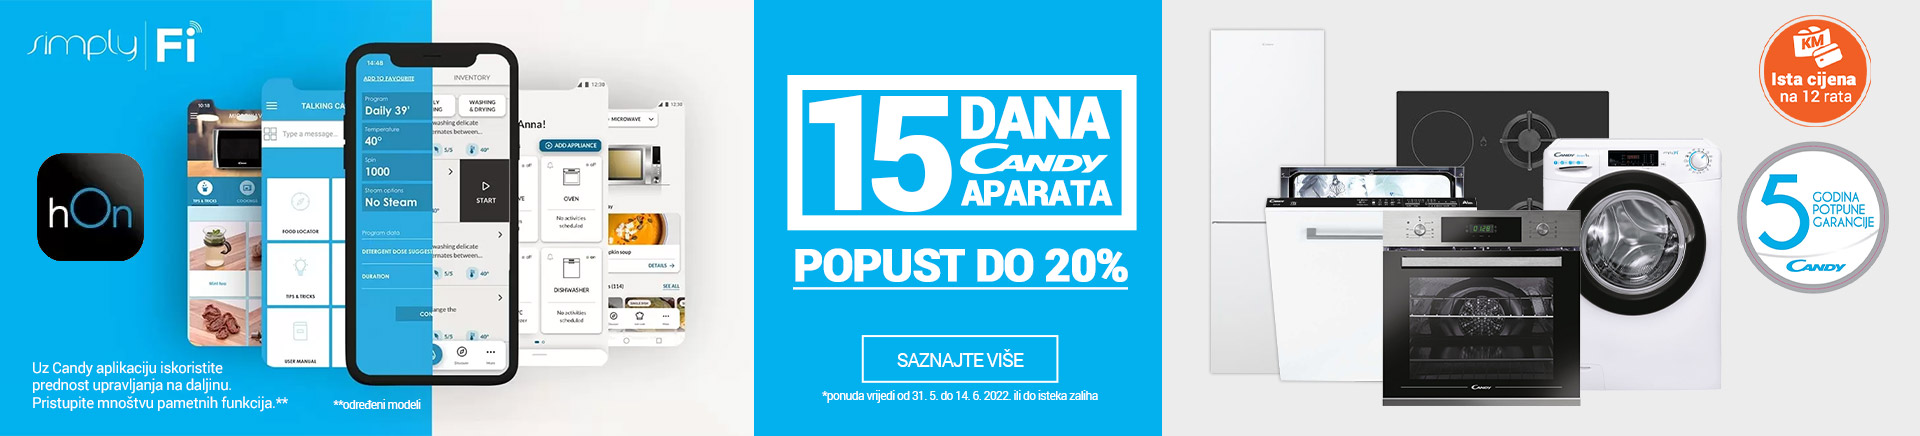 BA 15dana Candy Aparata 20posto MOBILE 380 X 436.jpg